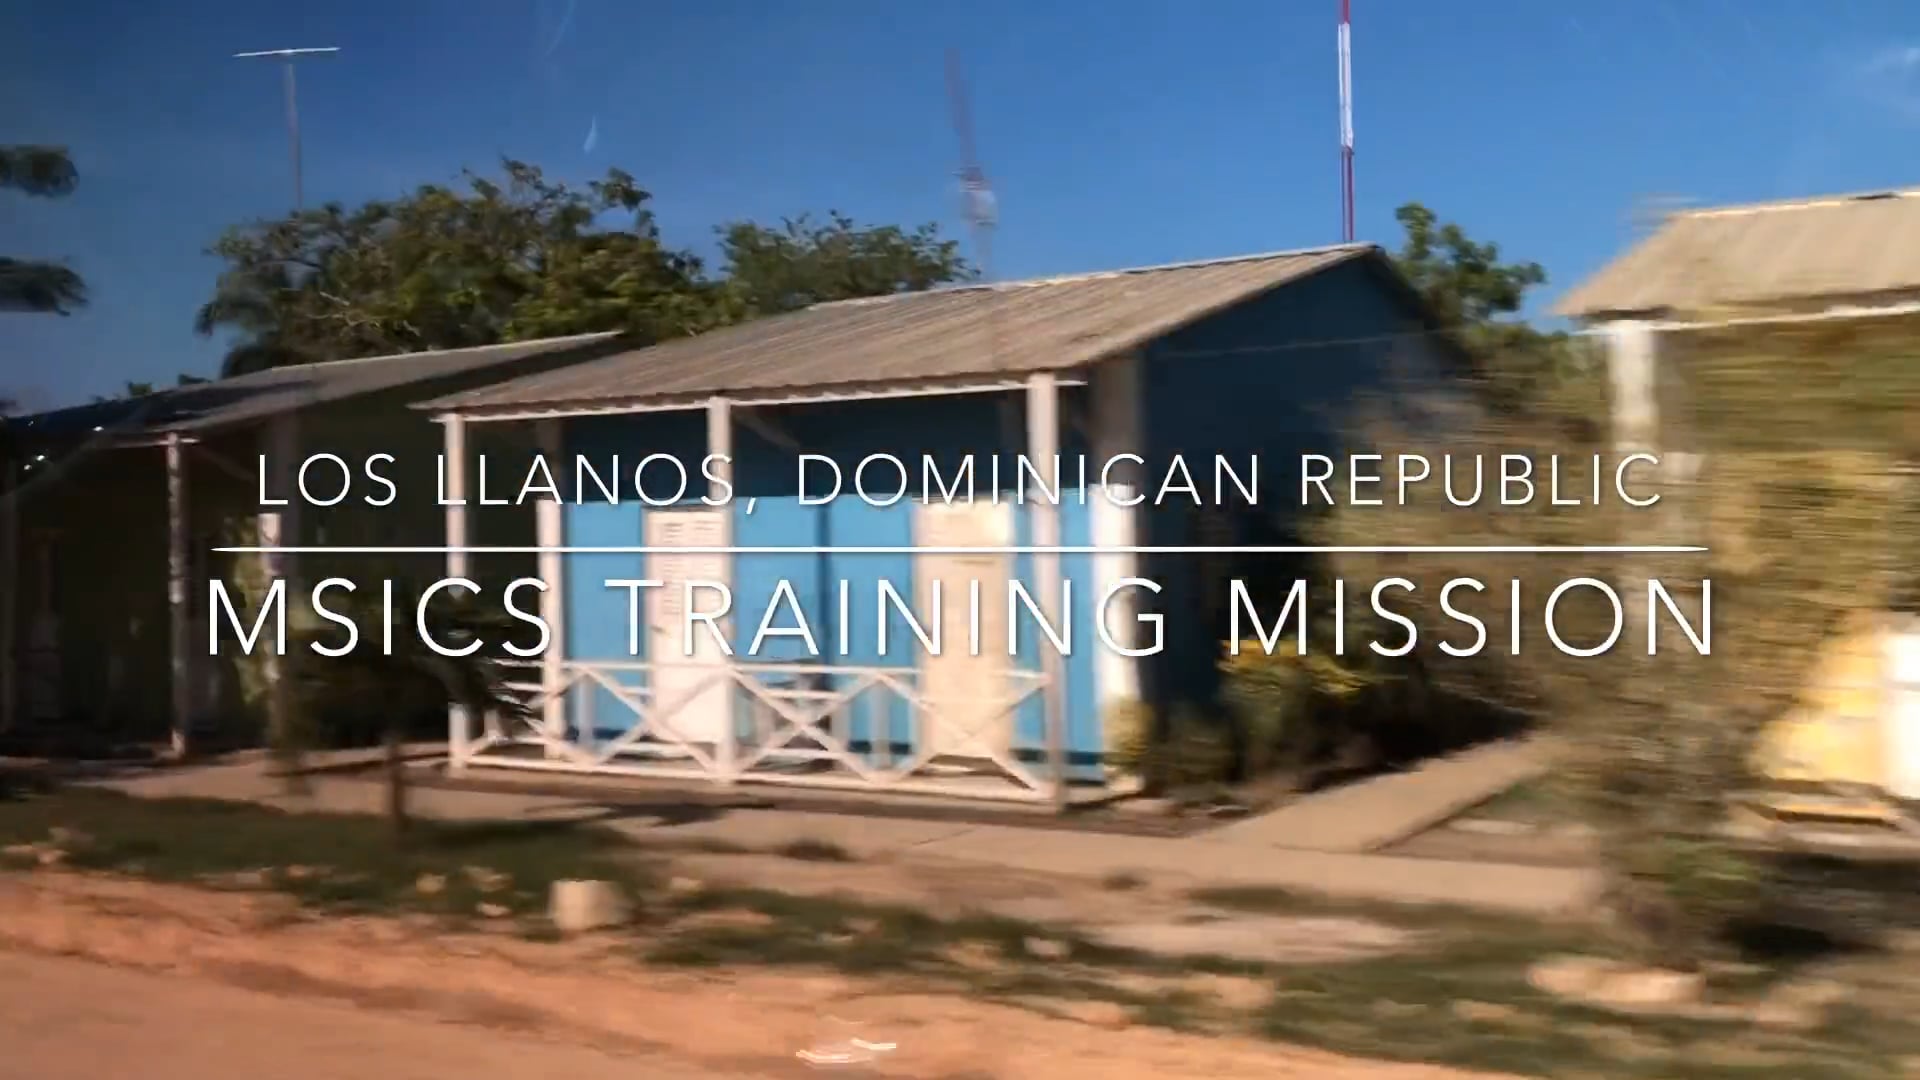 MSICS Training Mission . Los Llanos, Dominican Republic 